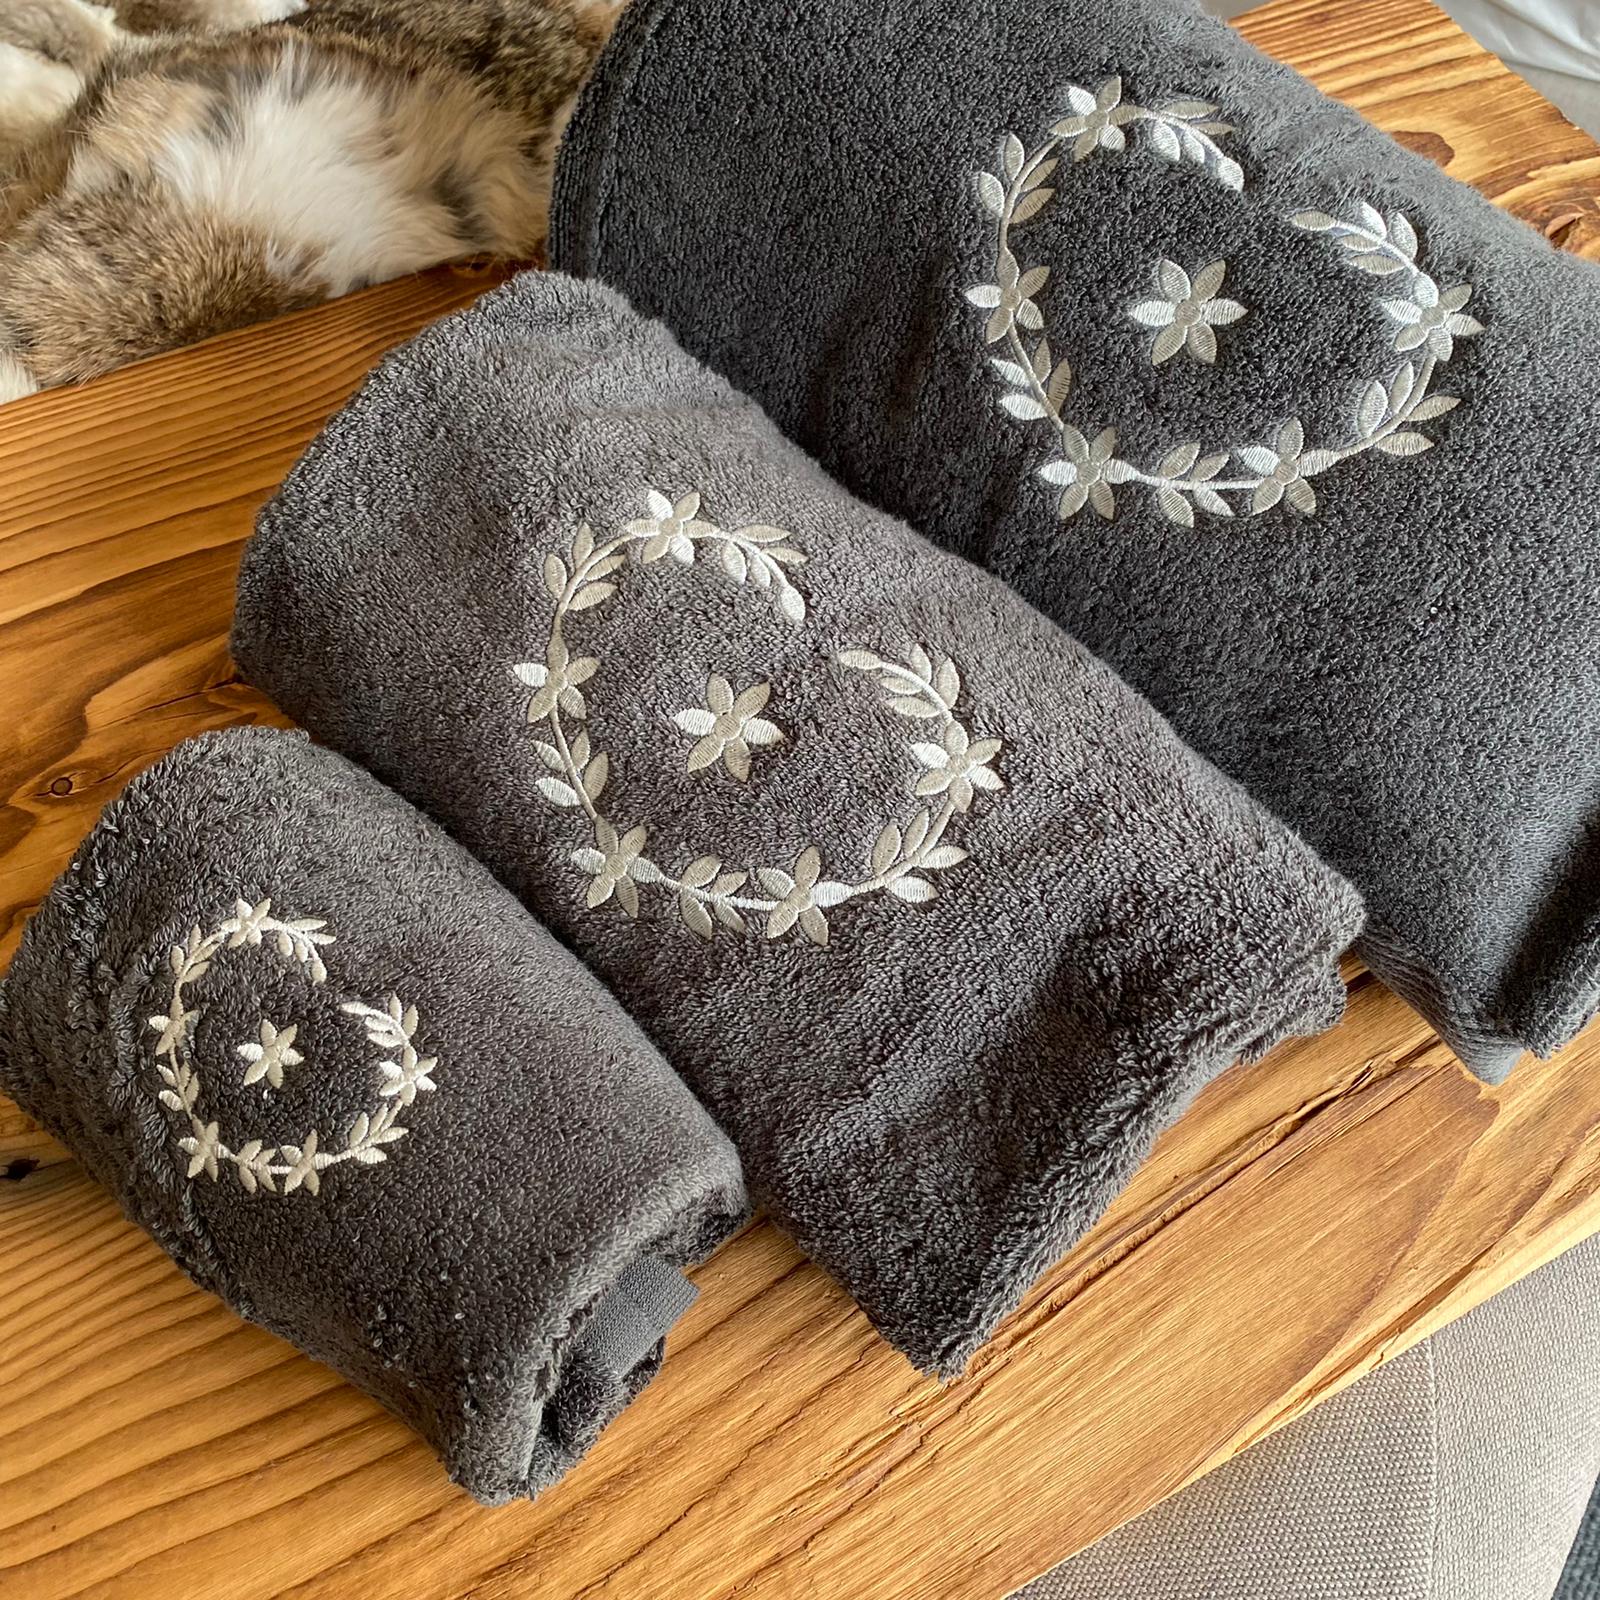 Asciugamani da montagna - set 3 pezzi Canazei antracite grigio perla